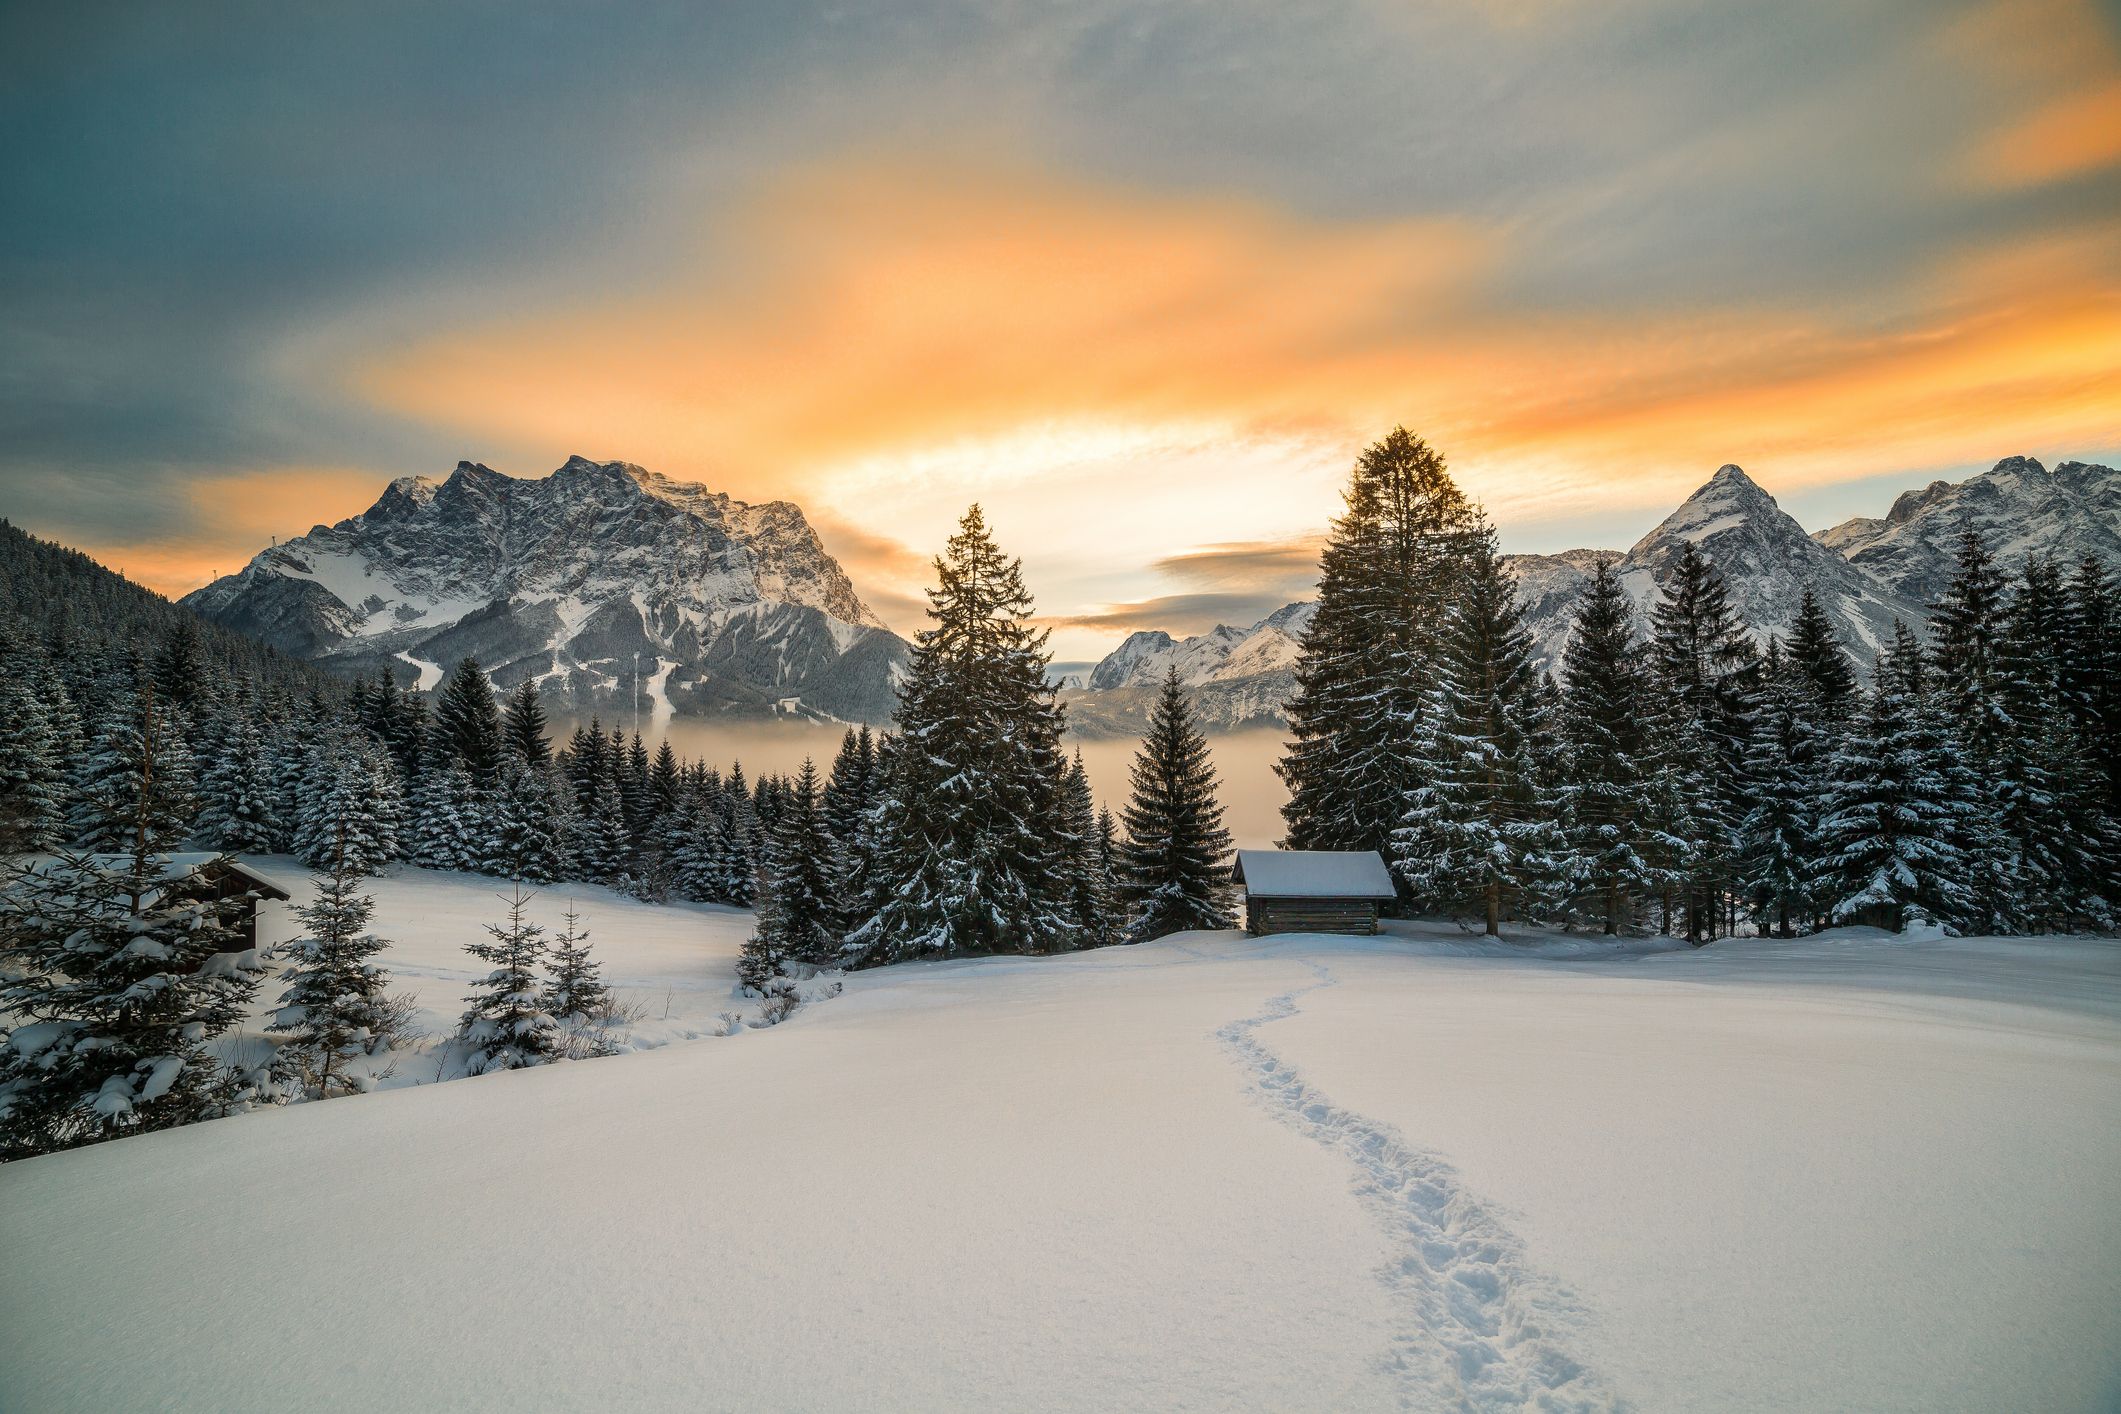 https://hips.hearstapps.com/hmg-prod.s3.amazonaws.com/images/winter-landscape-in-tyrol-austria-royalty-free-image-1575038894.jpg